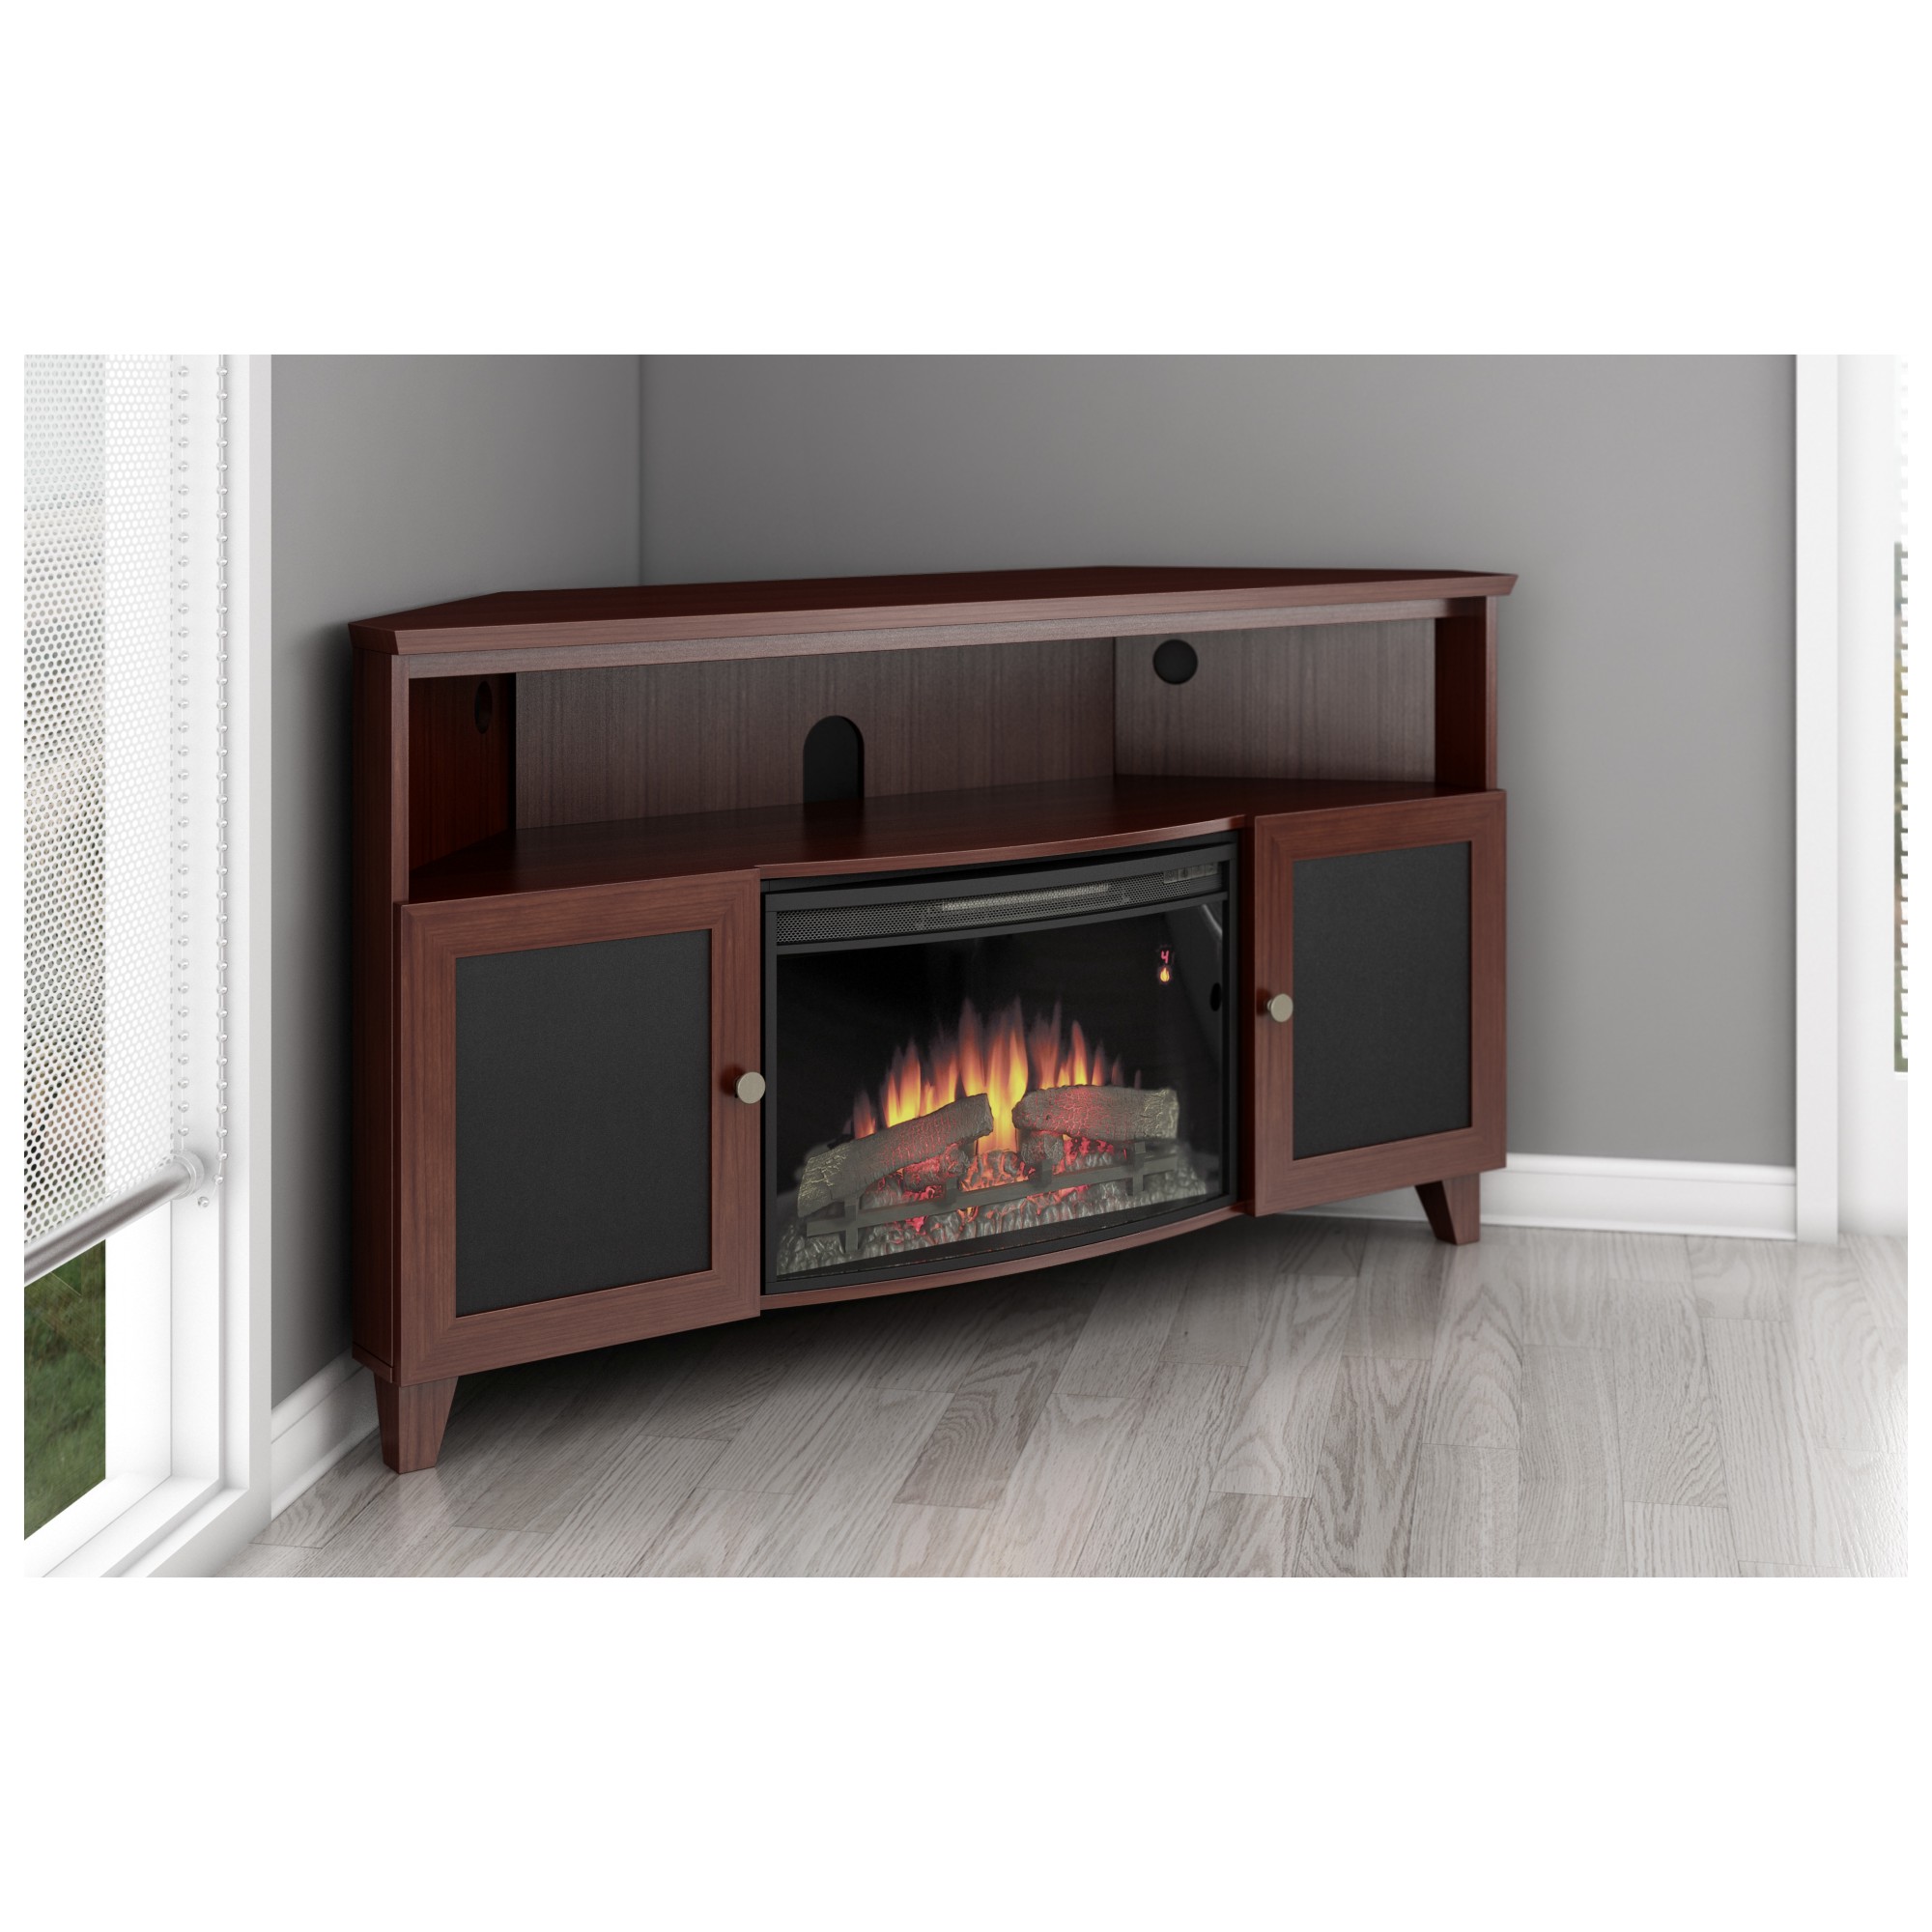 Shaker Fireplace Surround Luxury Nero Fire Design Gallery Fireplace Electric